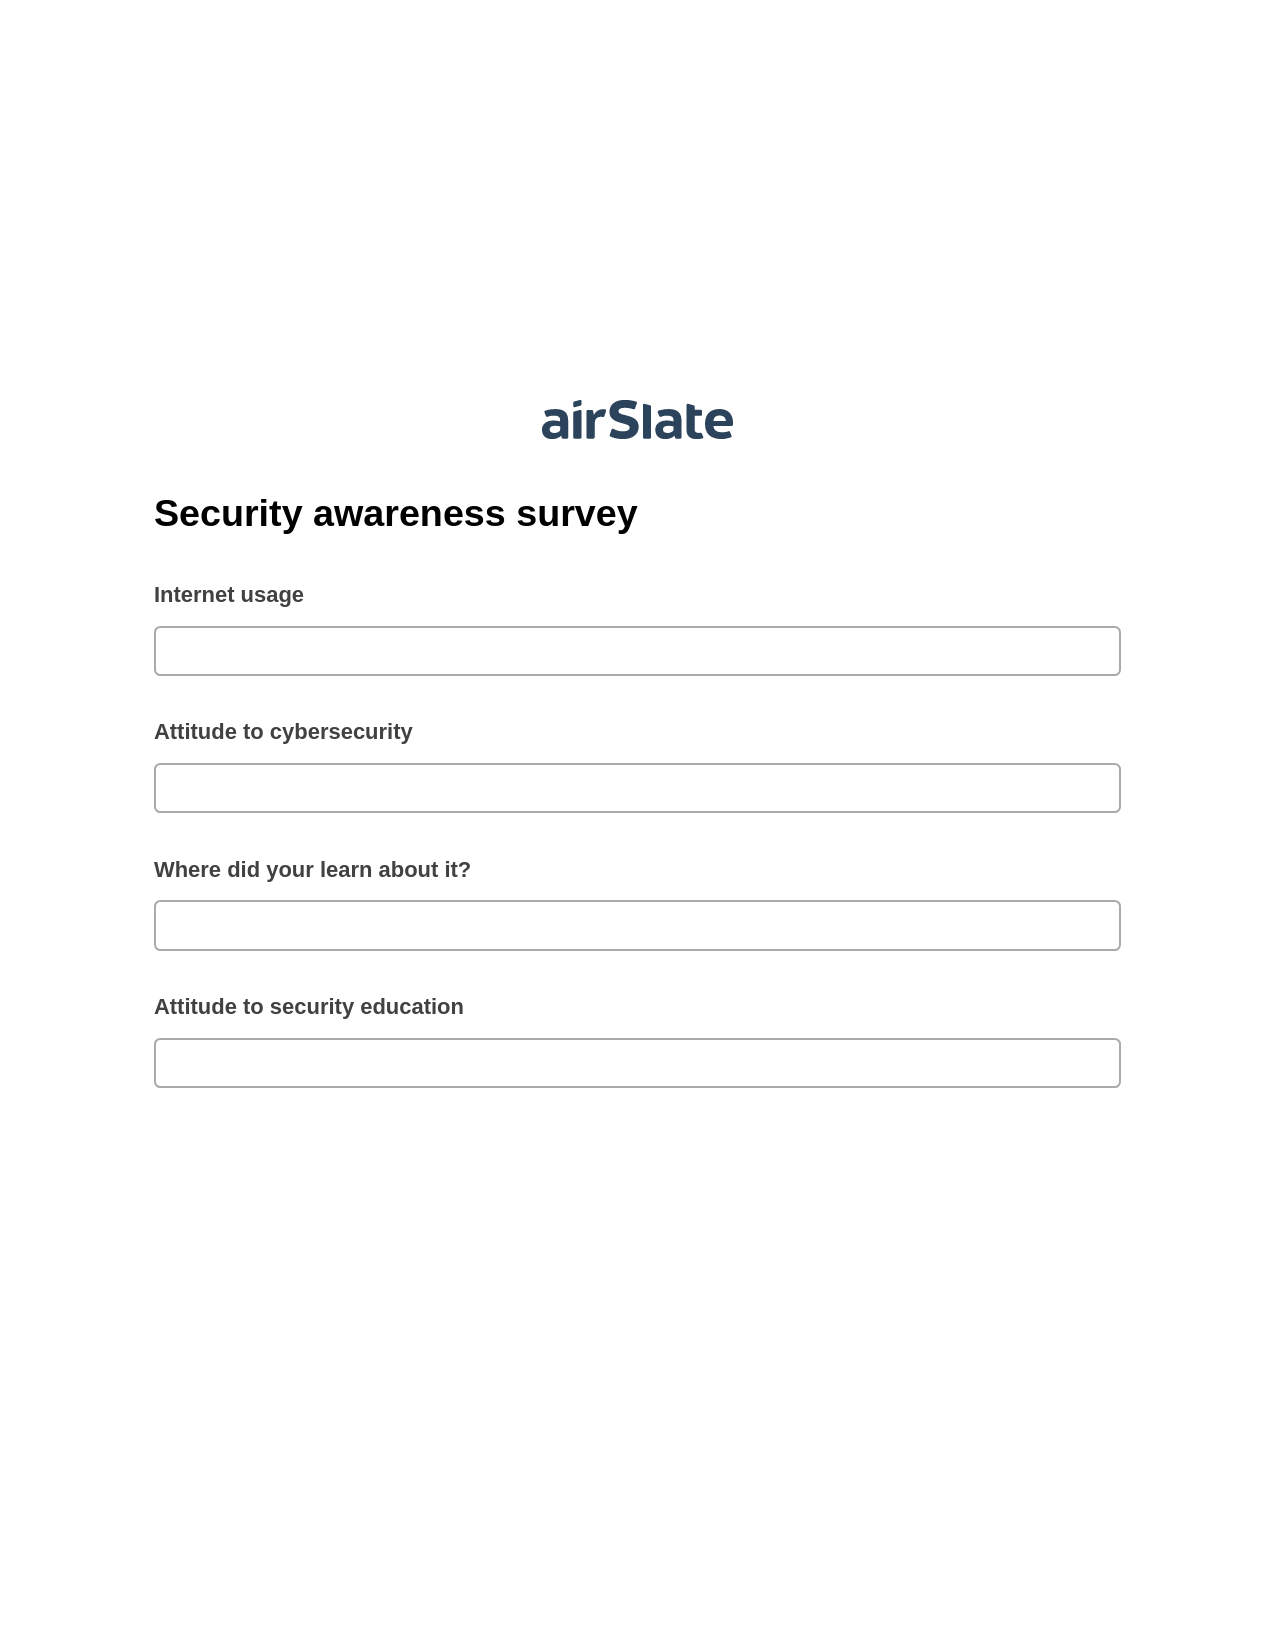 Multirole Security awareness survey Pre-fill from MS Dynamics 365 Records DEPRECATED, Google Calendar Bot, Dropbox Bot